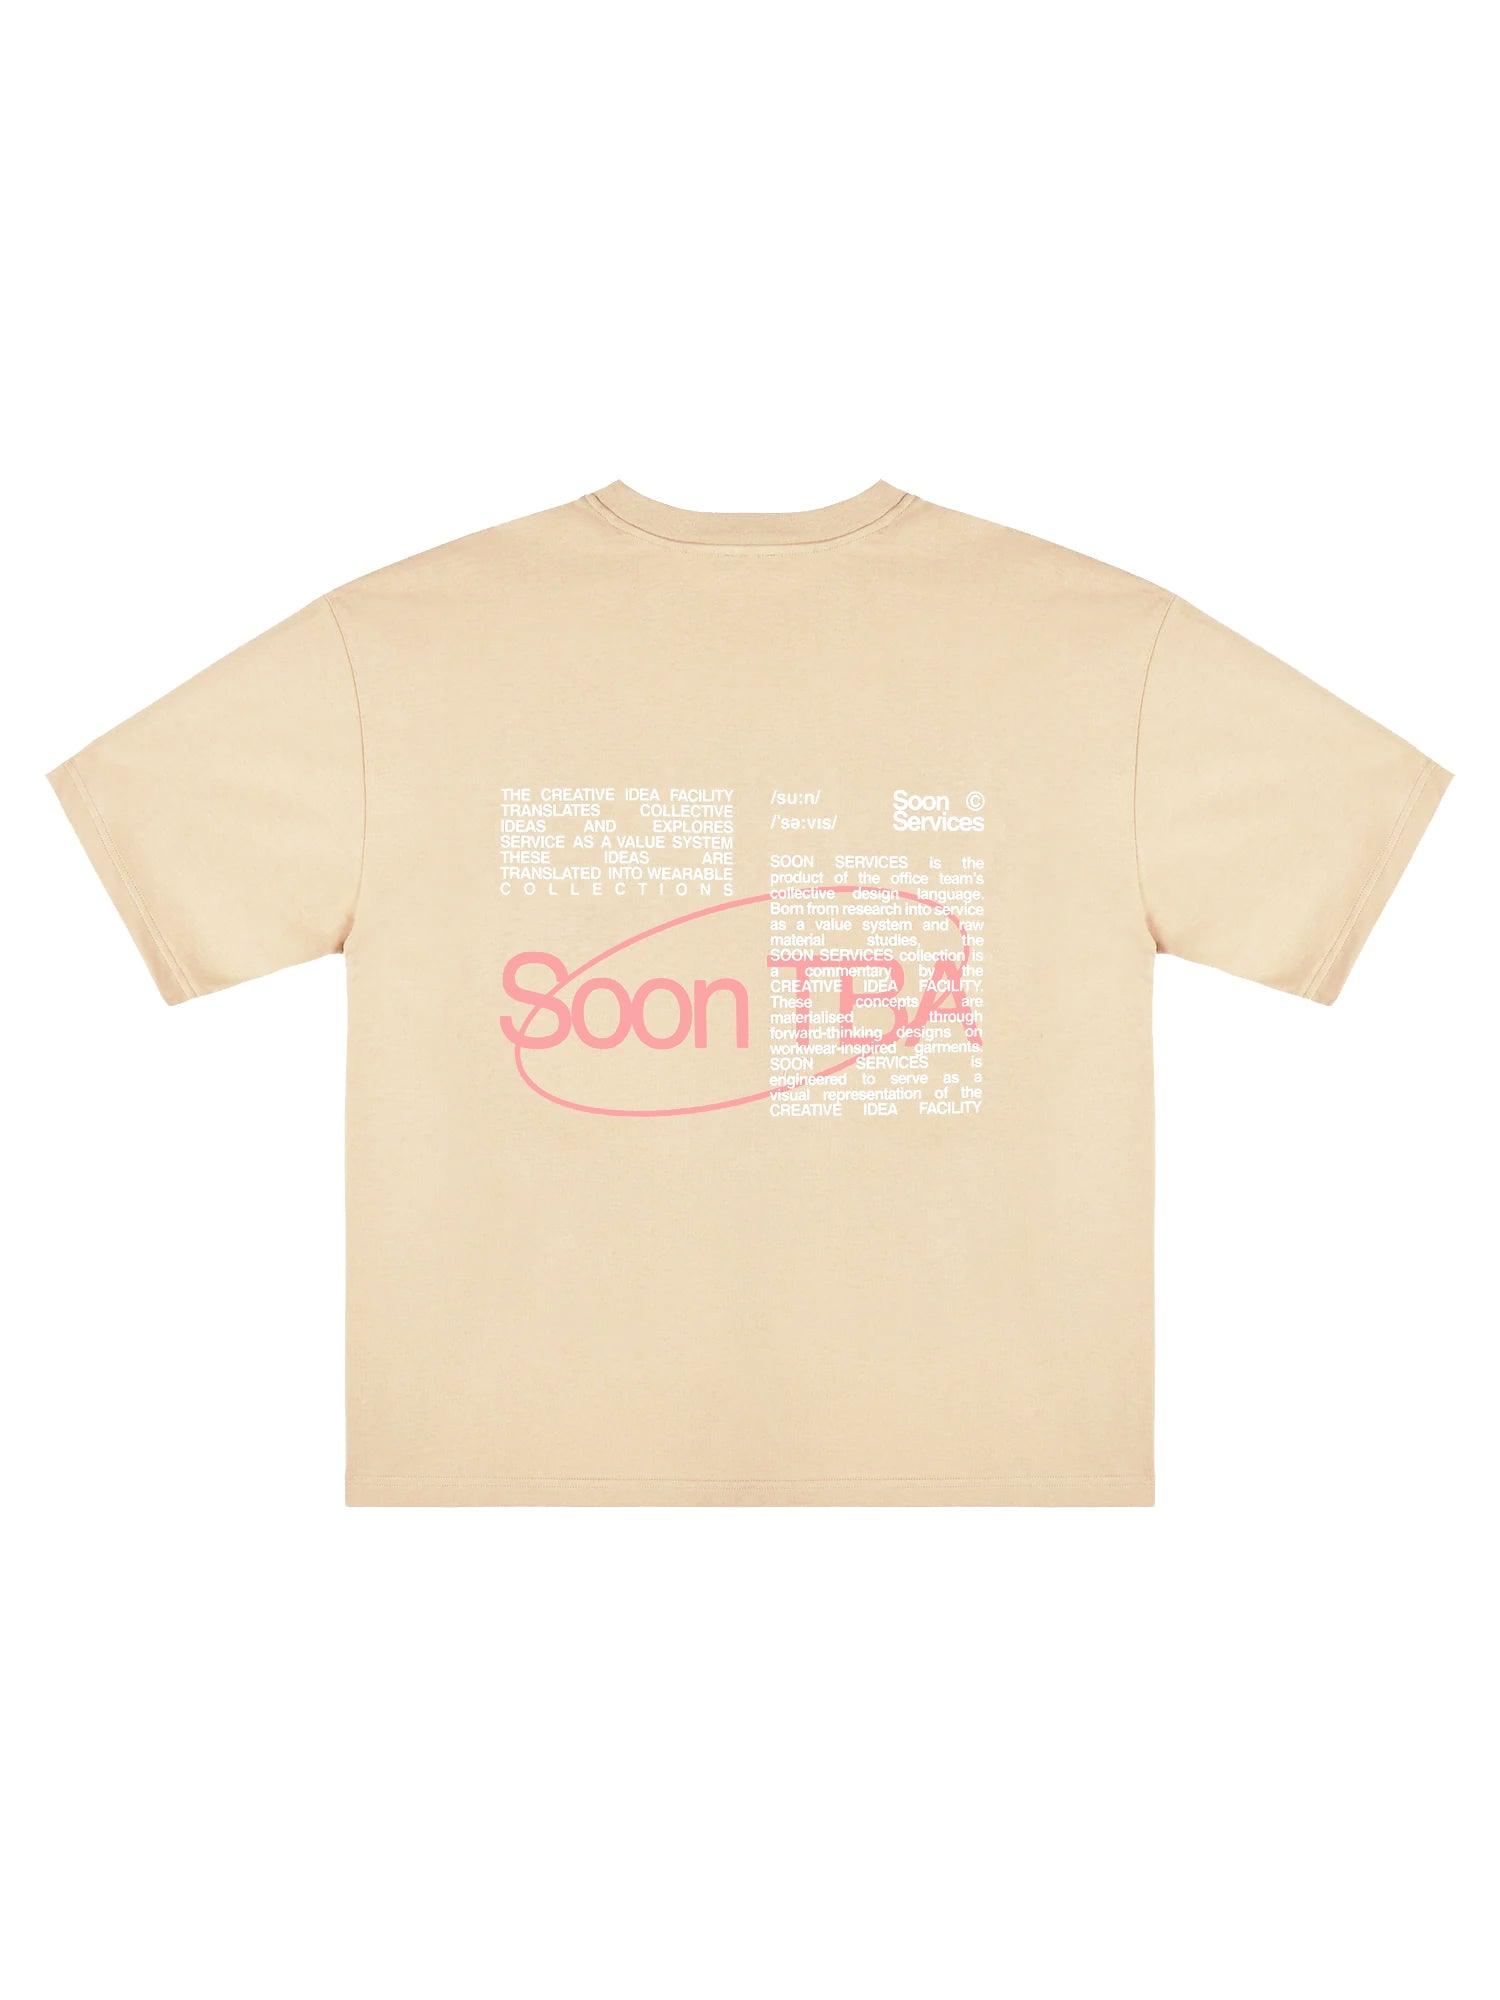 Soon TBA T-Shirt - SOON TO BE ANNOUNCED